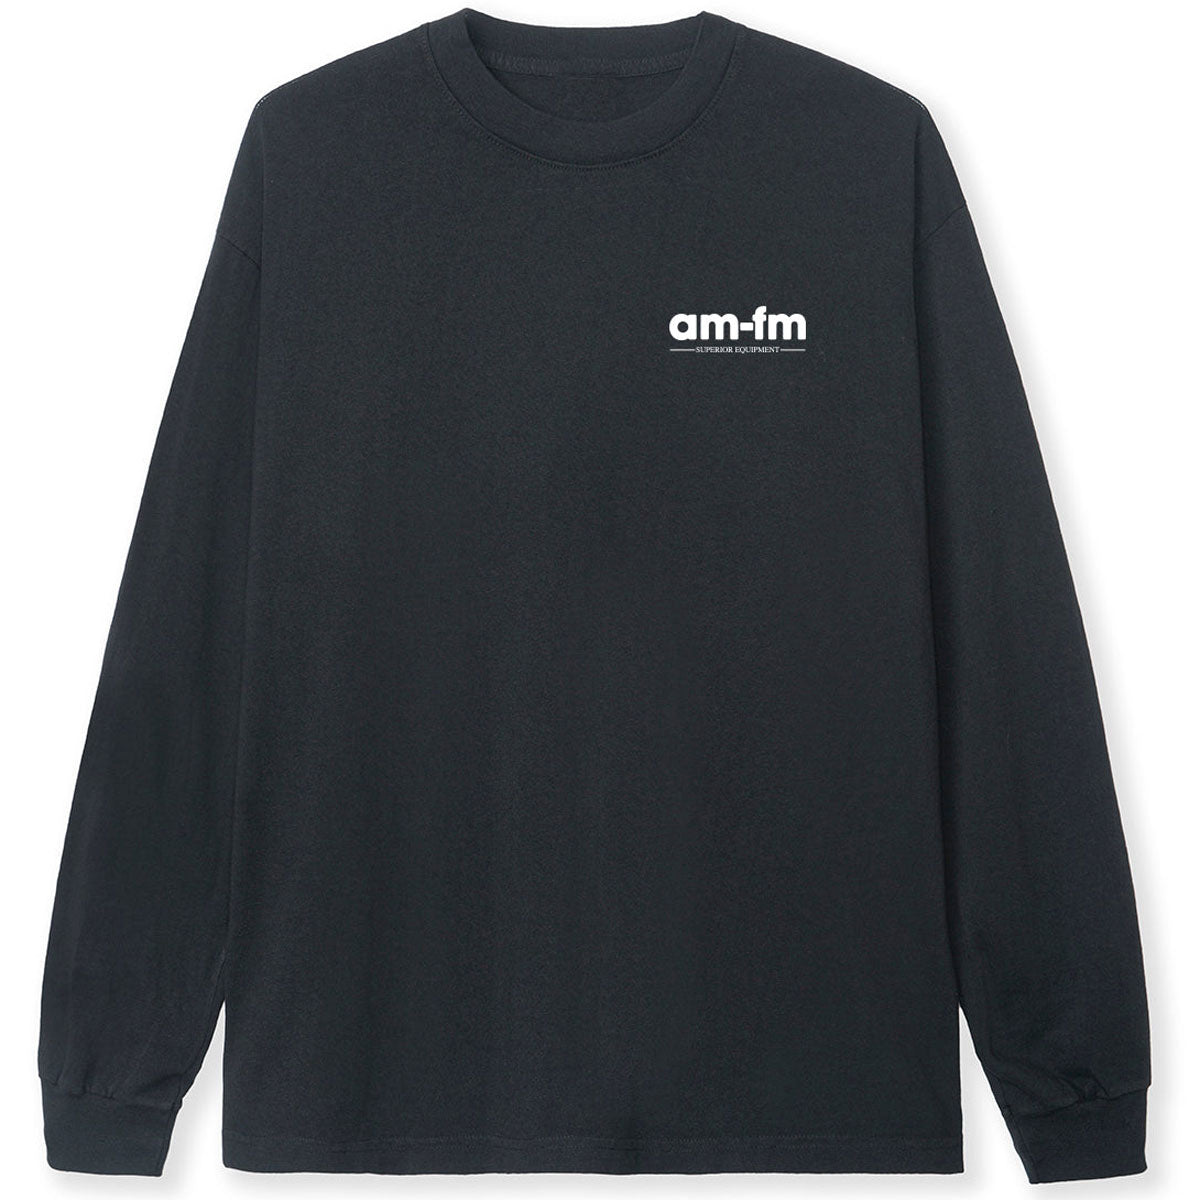 AM-FM Orb Long Sleeve T-Shirt - Black image 2